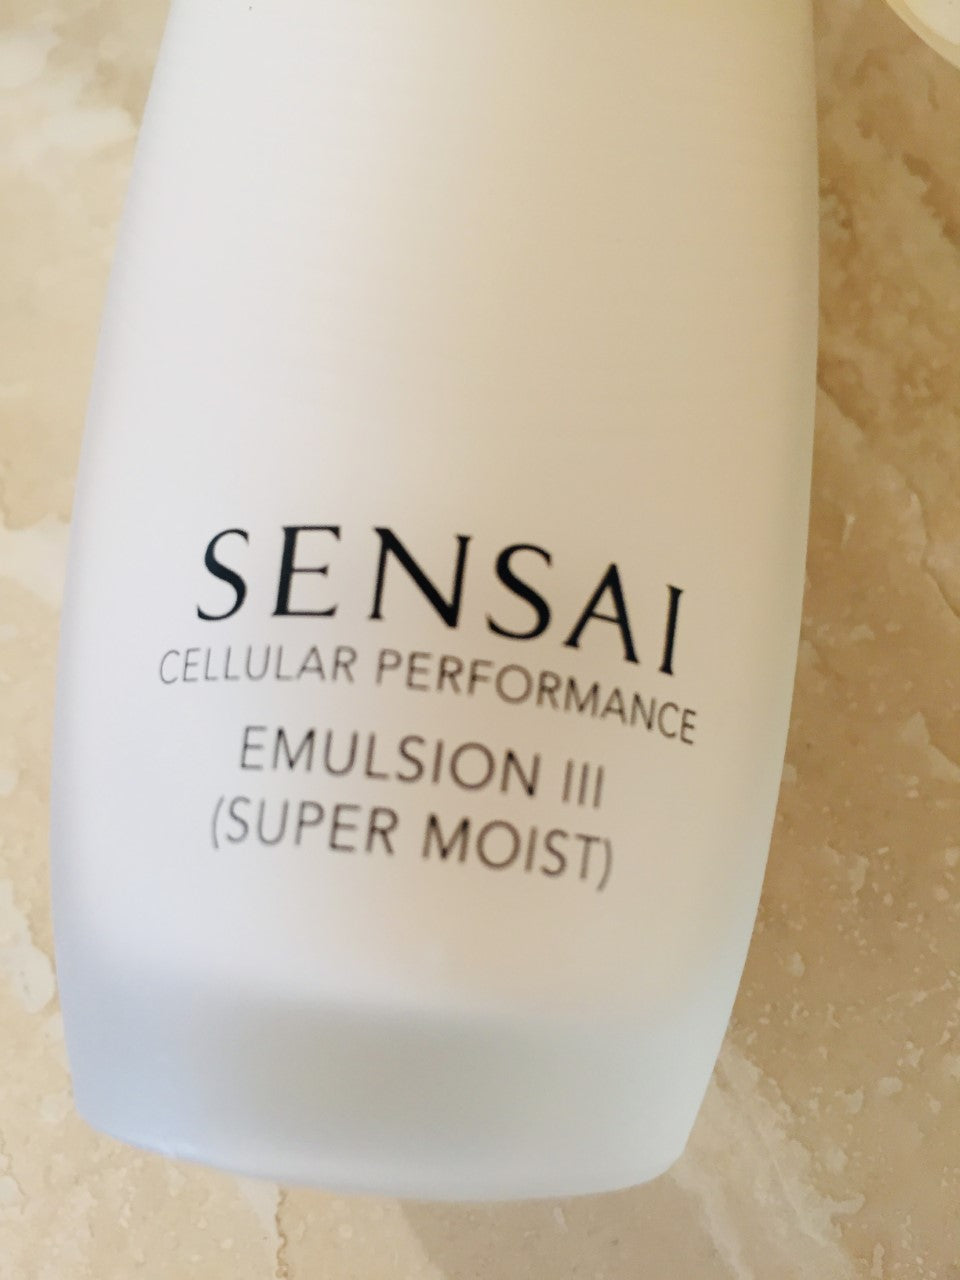 Sensai Cellular Performance Emulsion 3 (Super Moist)